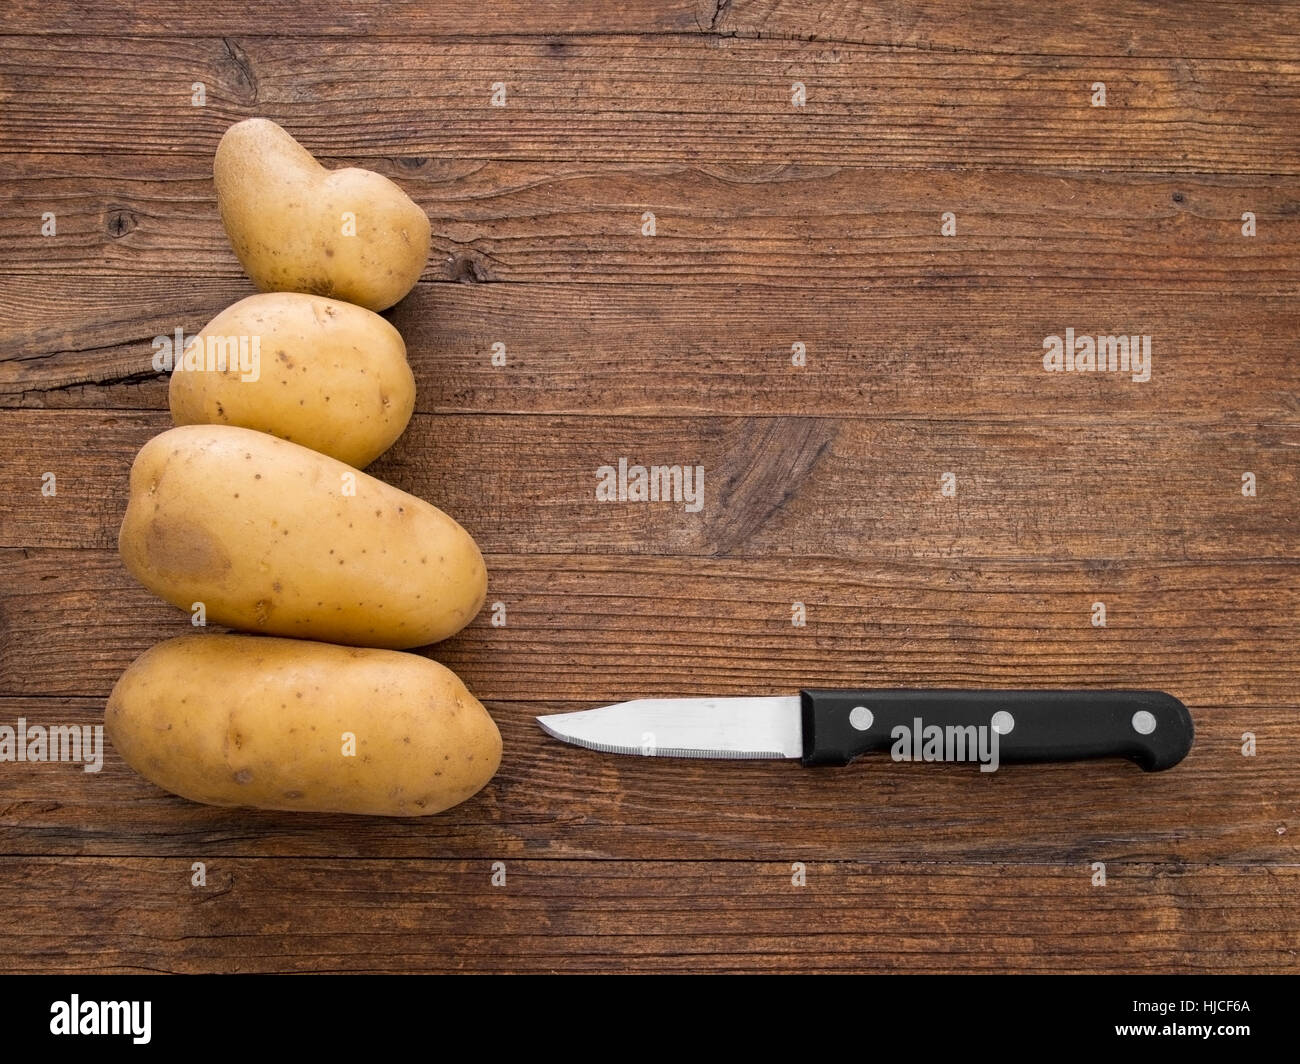 Staple food. Potatoes ready for preparing, peeling. Stock Photo